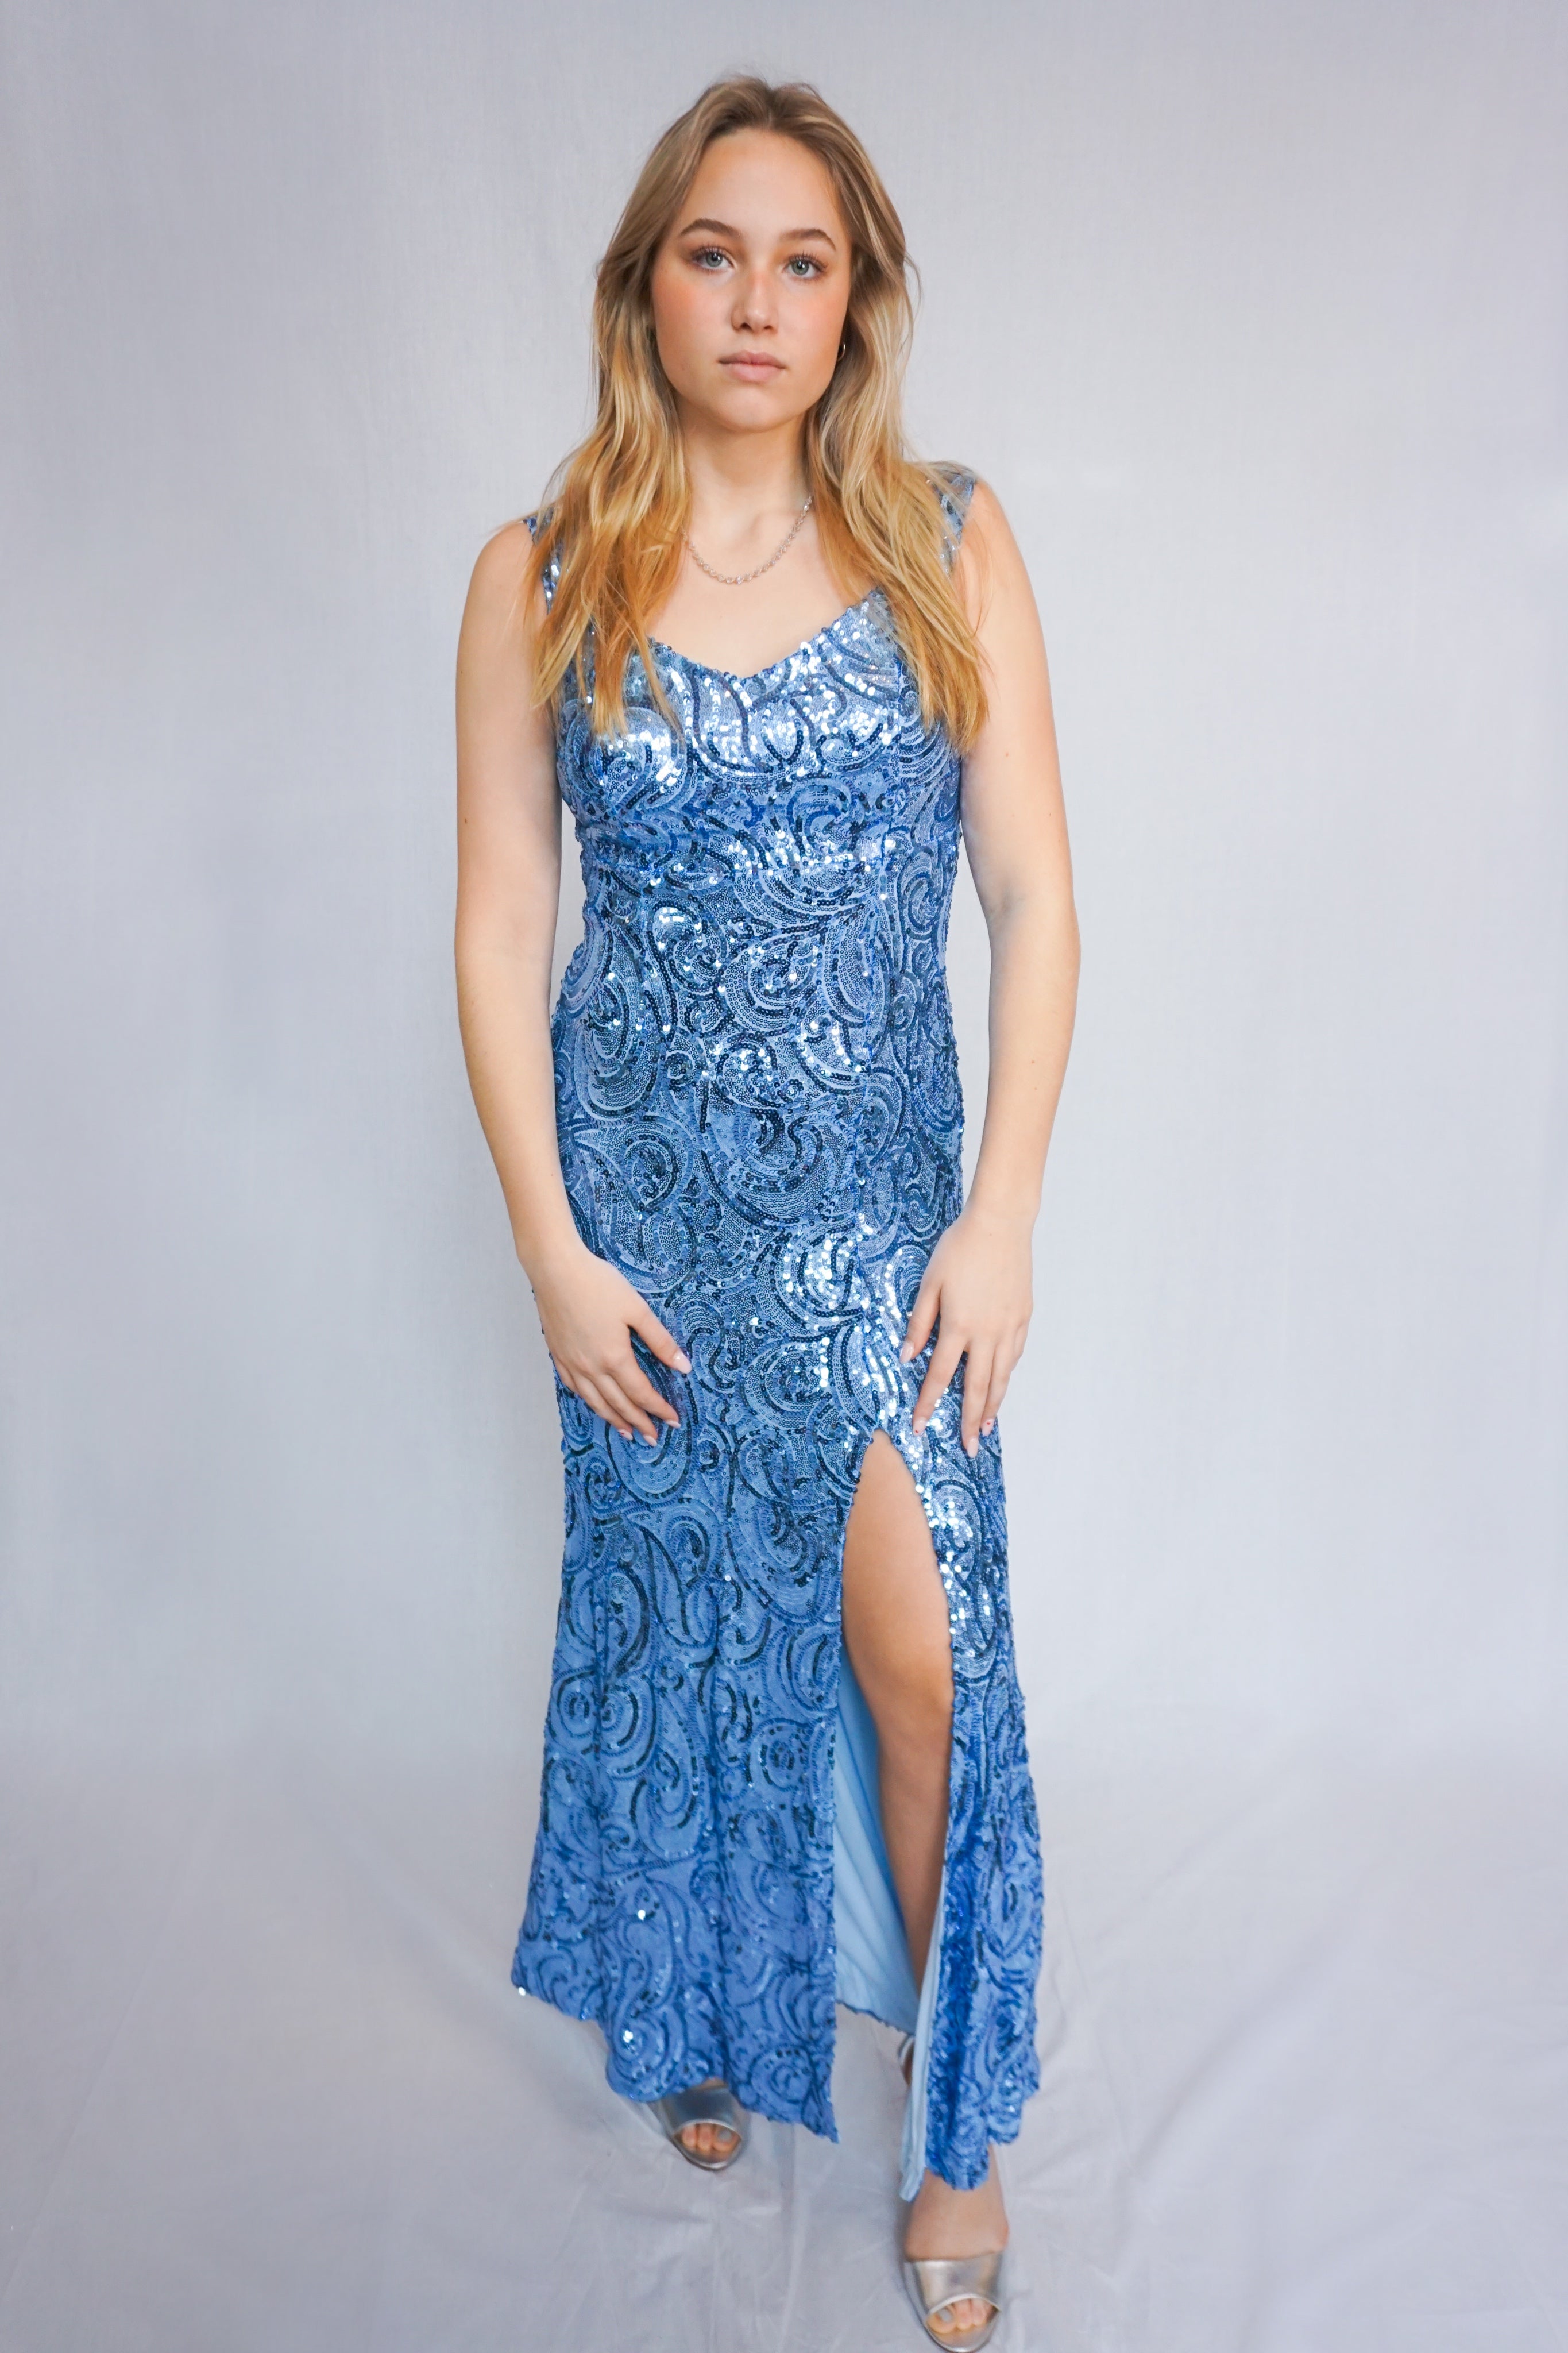 Ice Blue Sequin Formal Dress